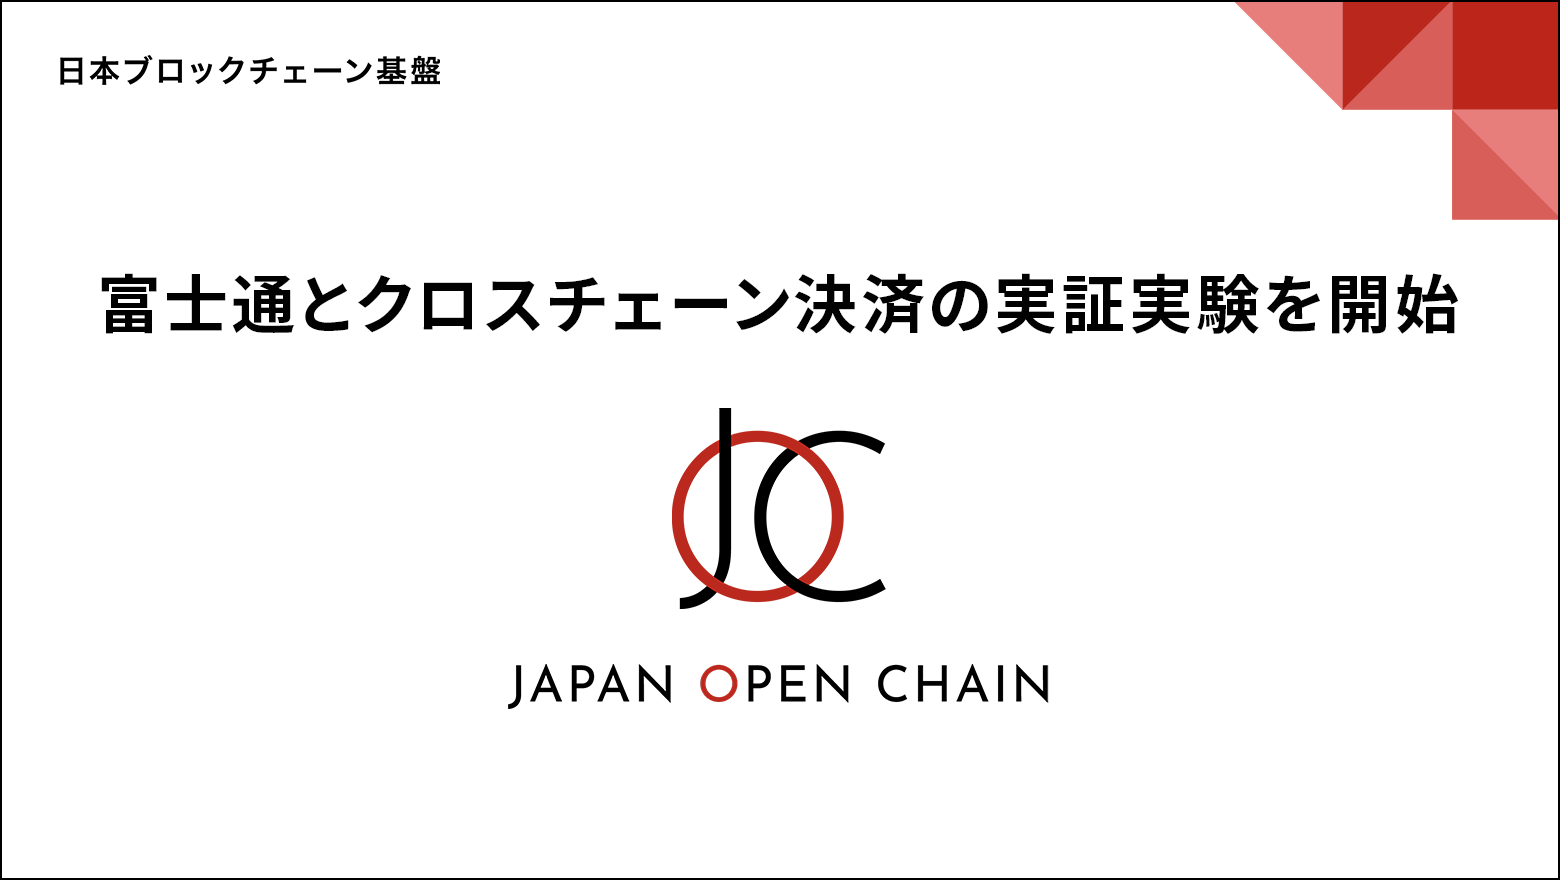 Japan Open Chain、web3開発インフラ「Bunzz」と戦略的パートナーシップを締結